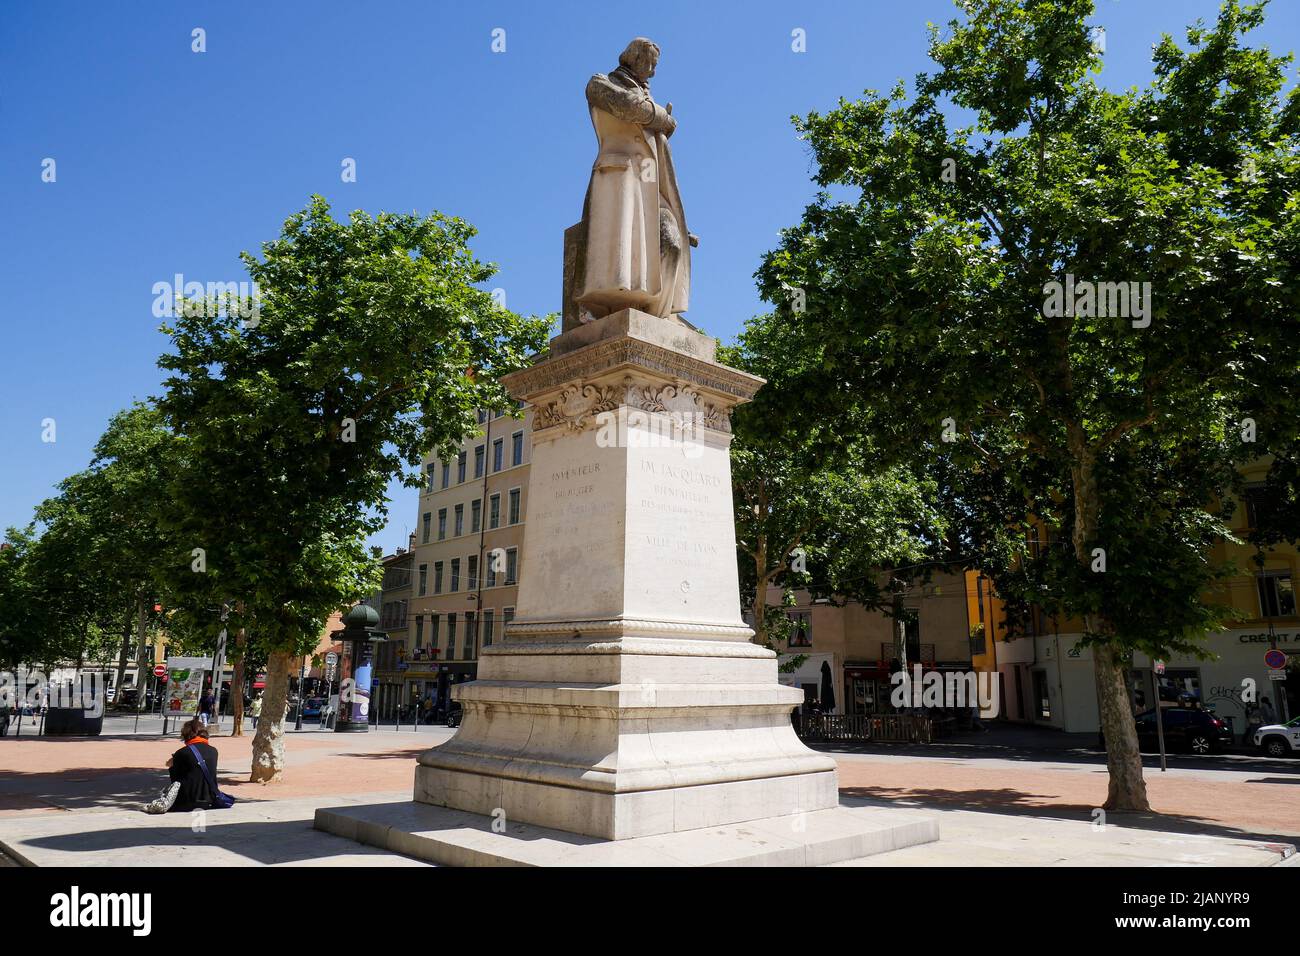 Statue of Joseph Marie Jacquard, inventor of the loom, Croix-Rousse square, Croix-Rousse district, Lyon, Rhone-Alps Auvergne region, Central-Eastern France Stock Photo